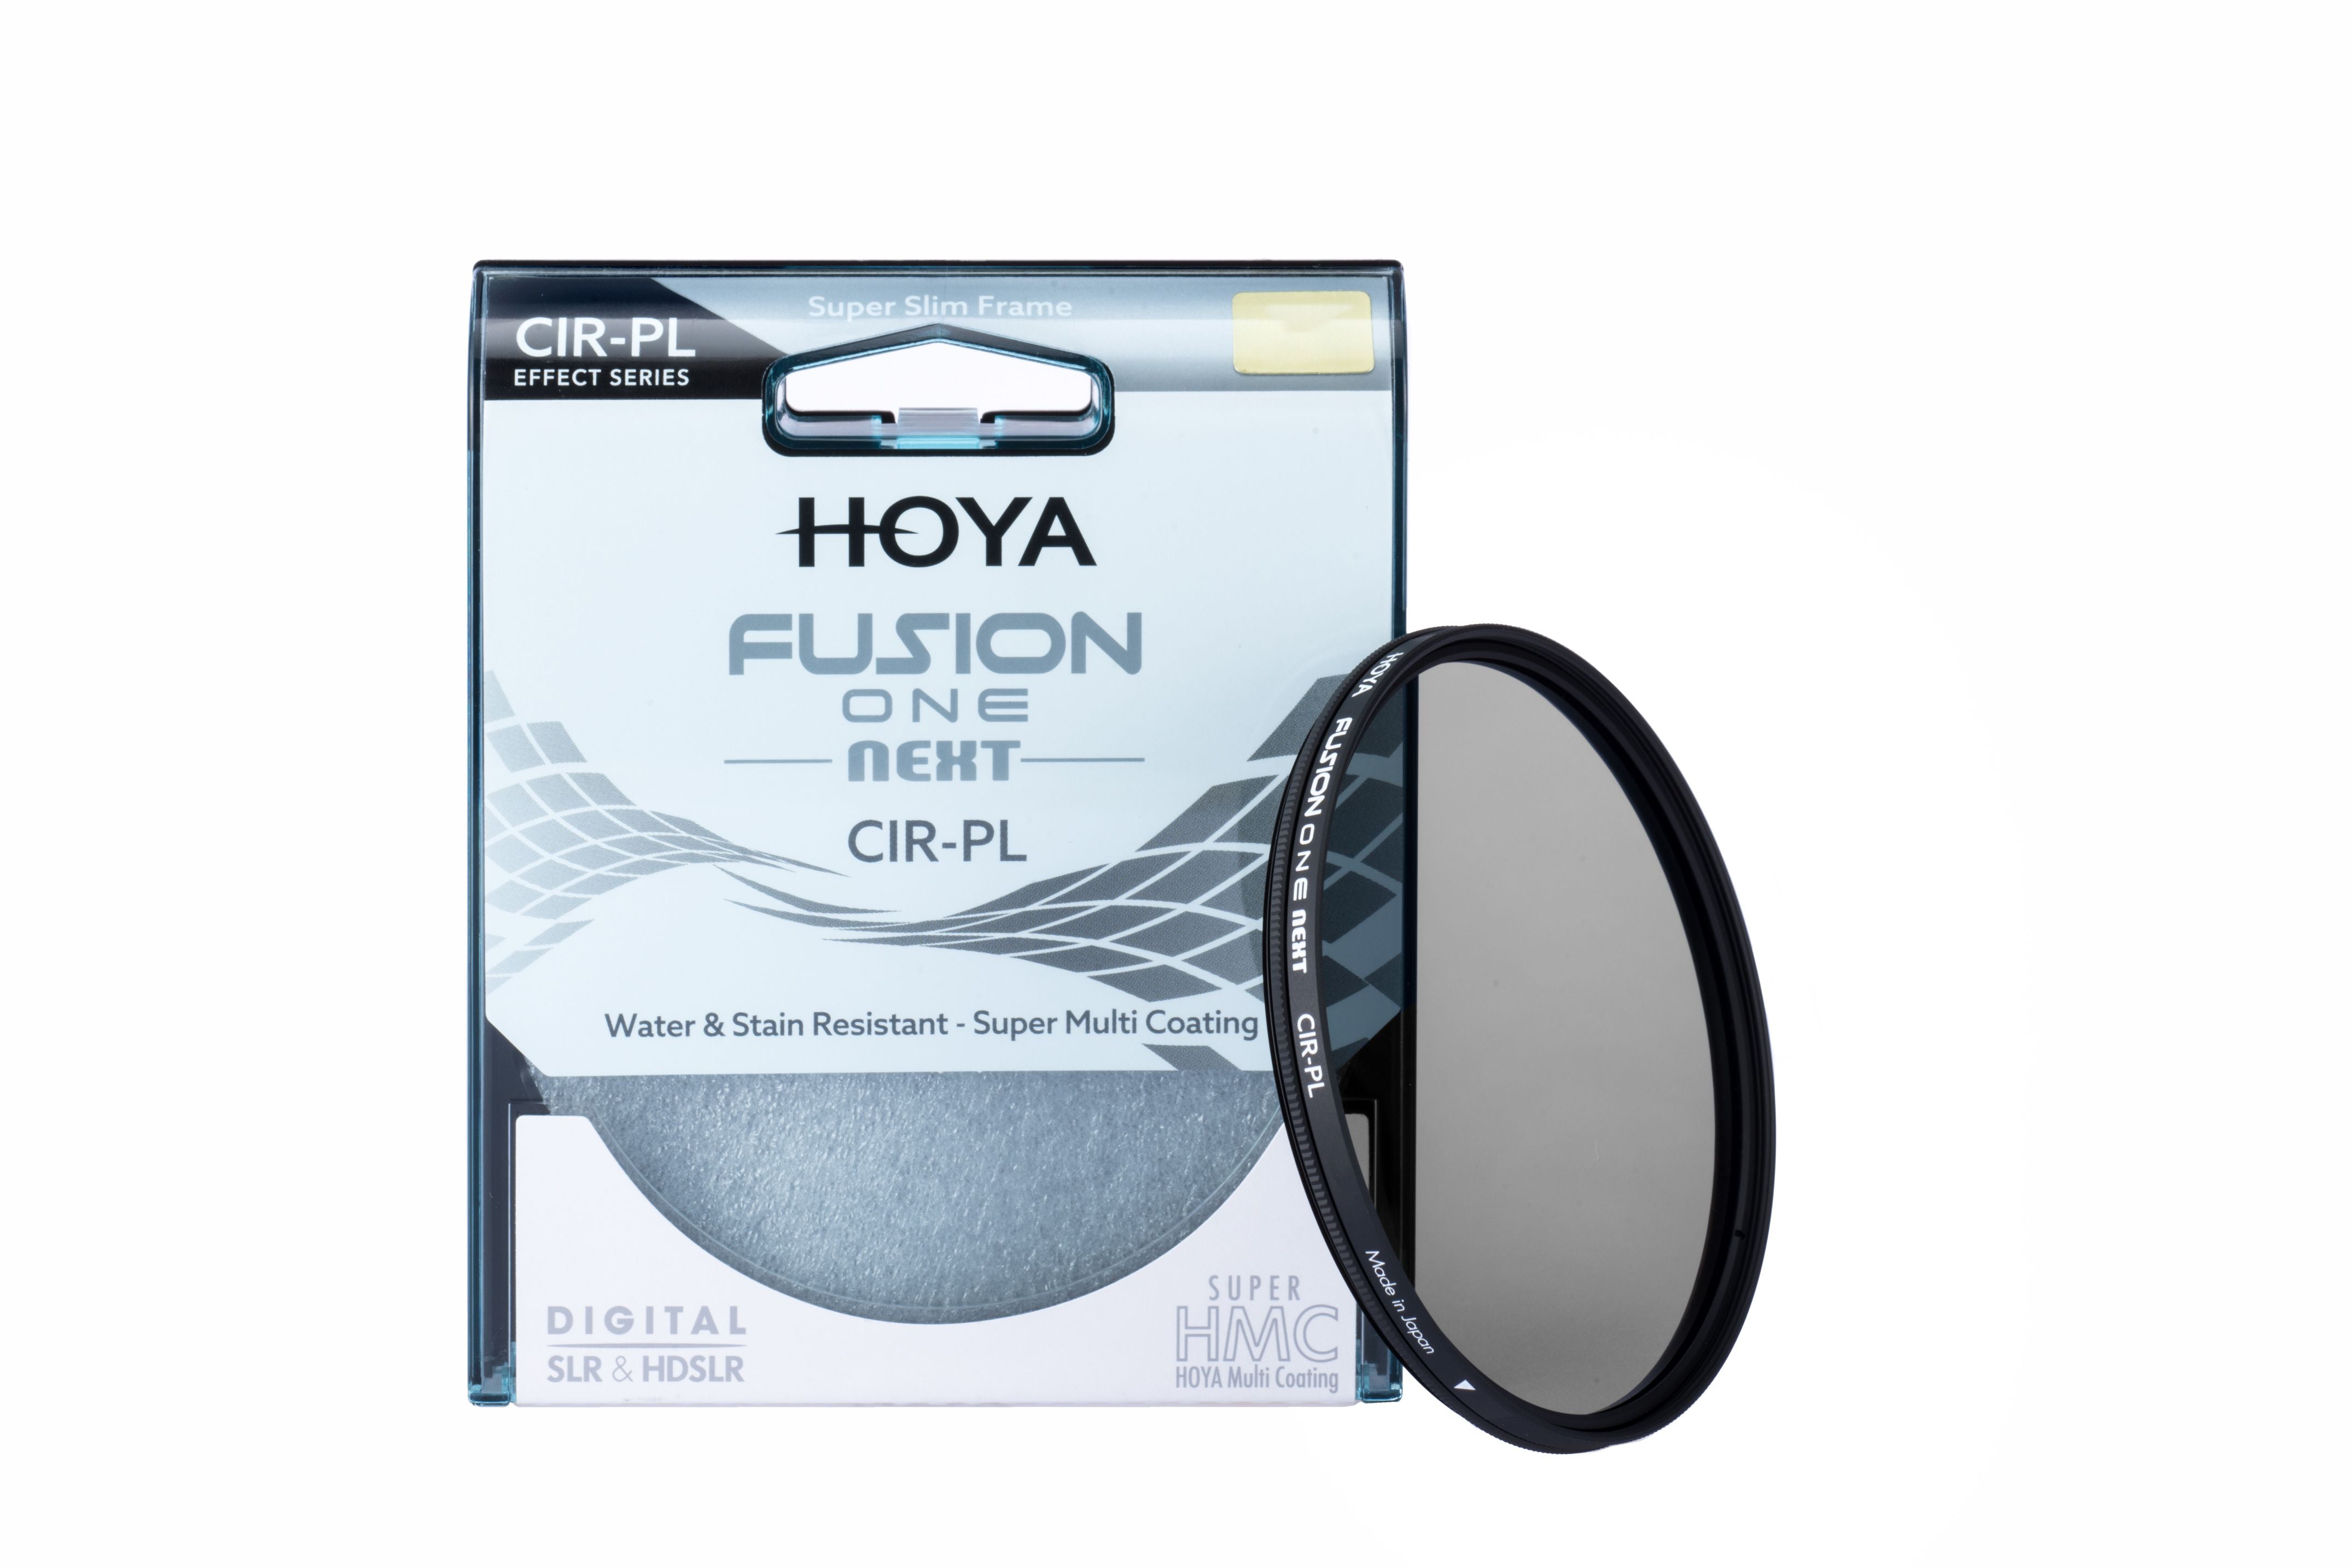 Product Image of Hoya Fusion One Next Circular Polariser